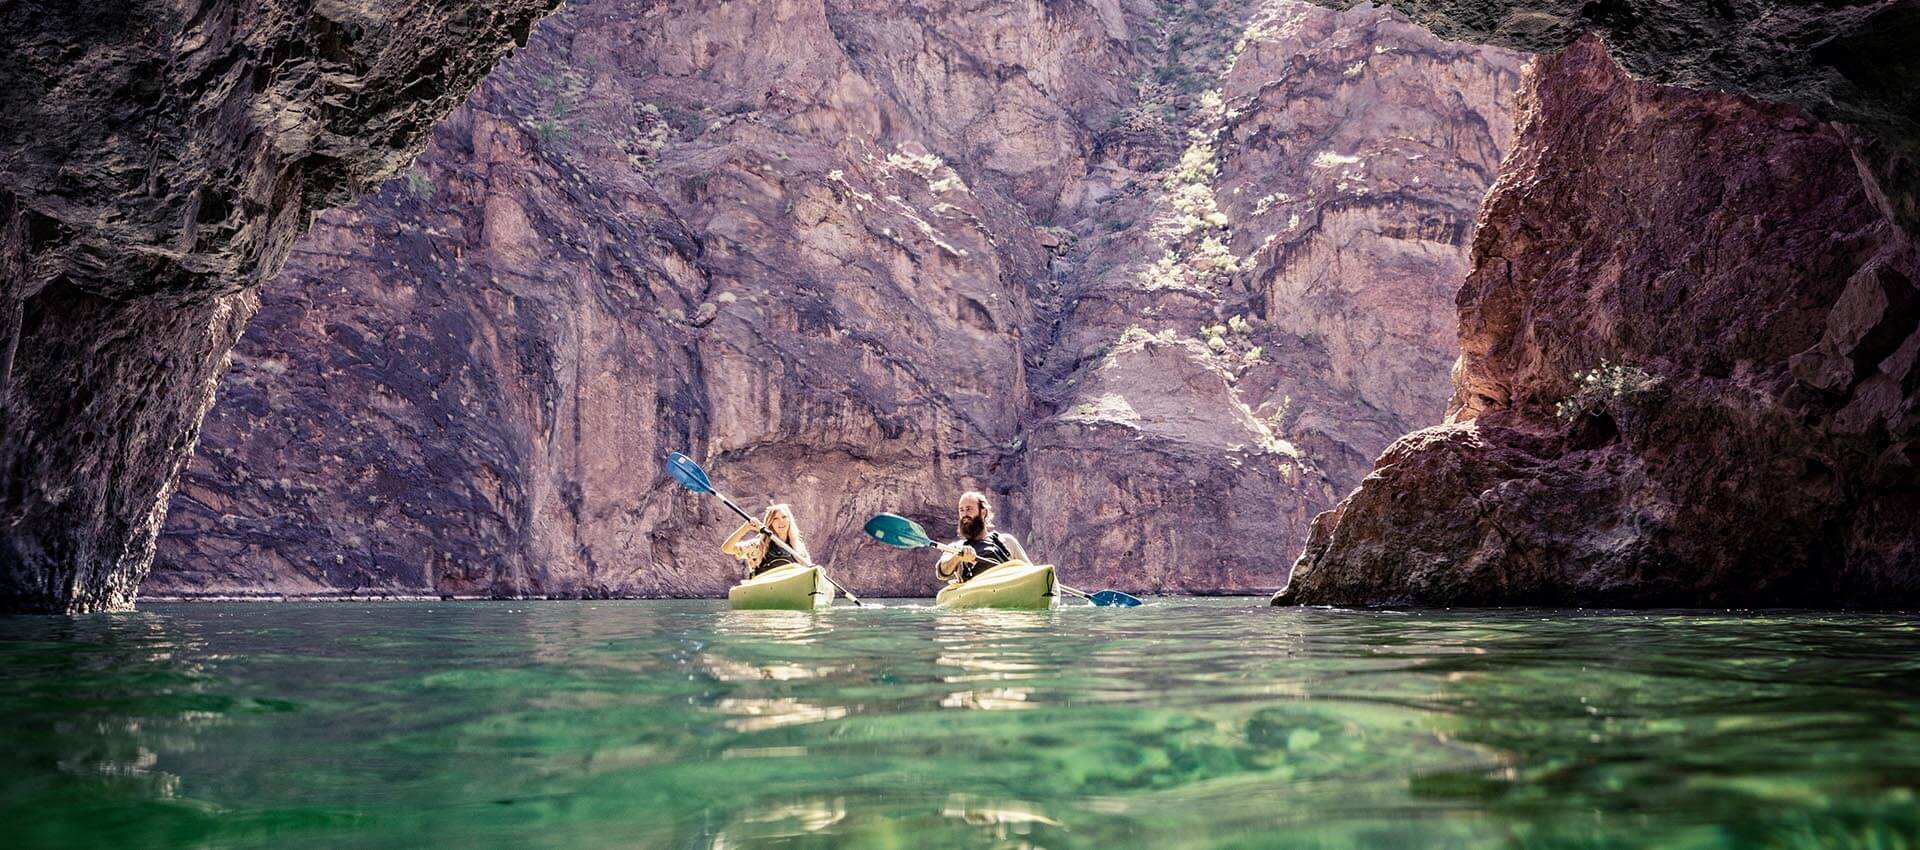 Black Canyon Kayaking, Colorado River, Hoover Dam